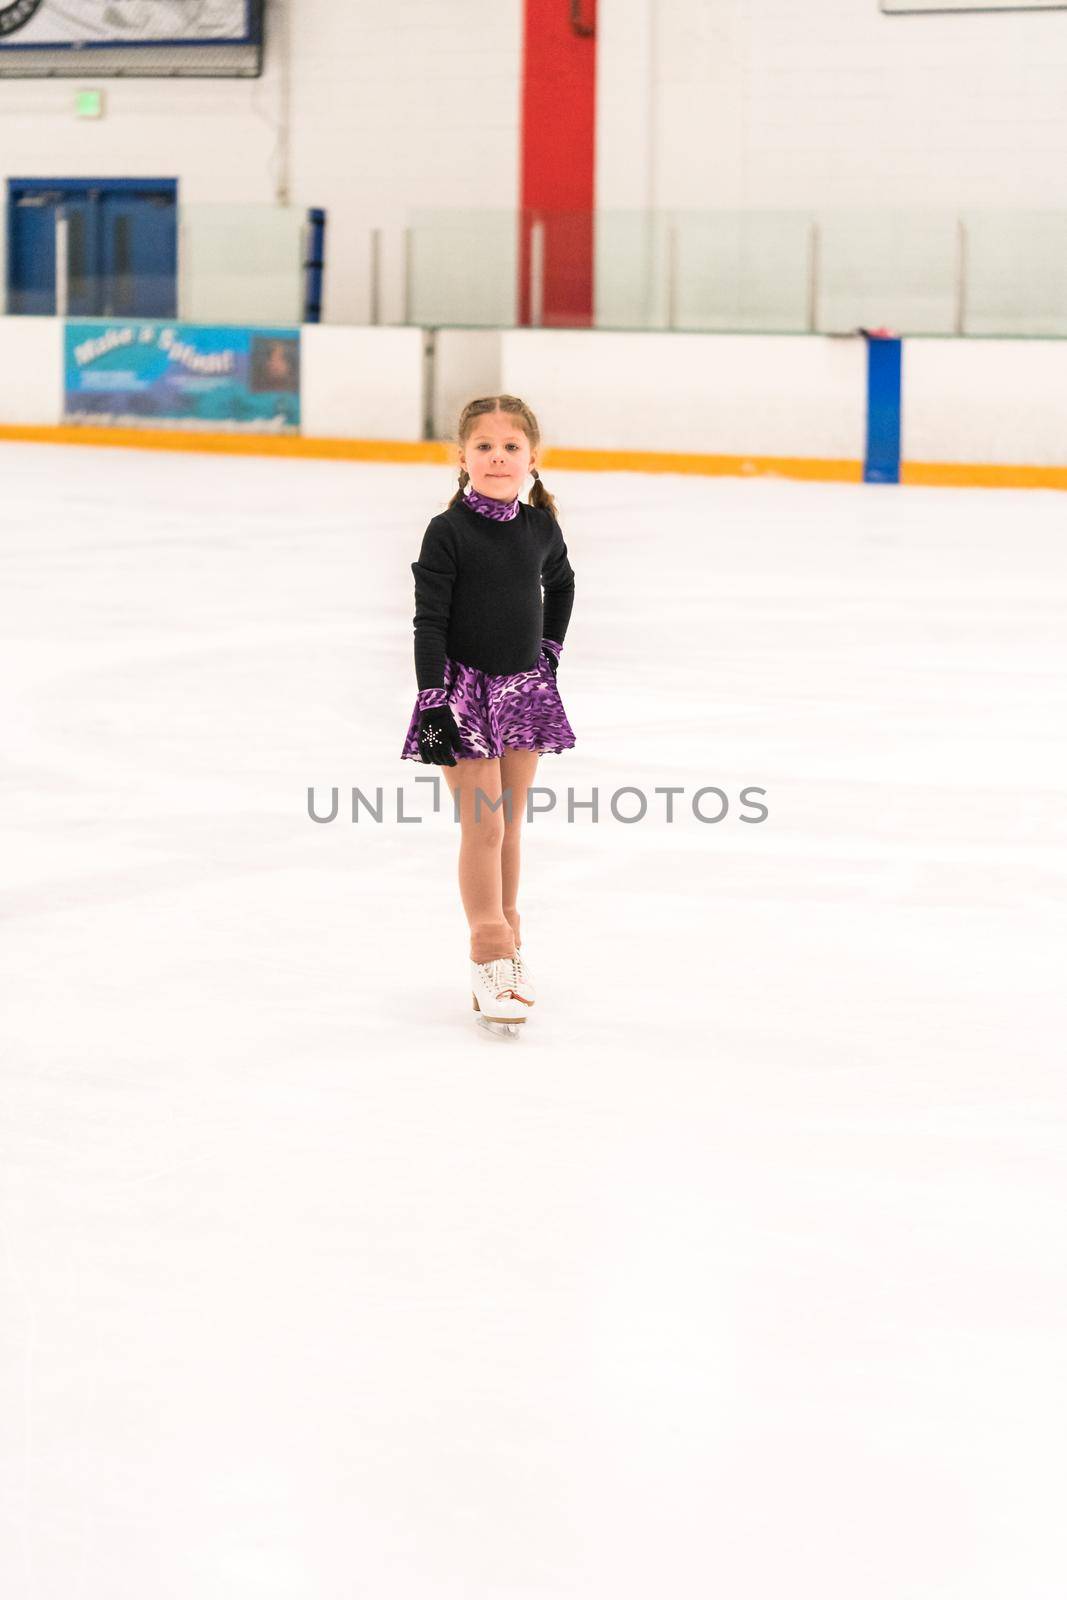 Little girl practicing figure skating on indoor ice skating rink.